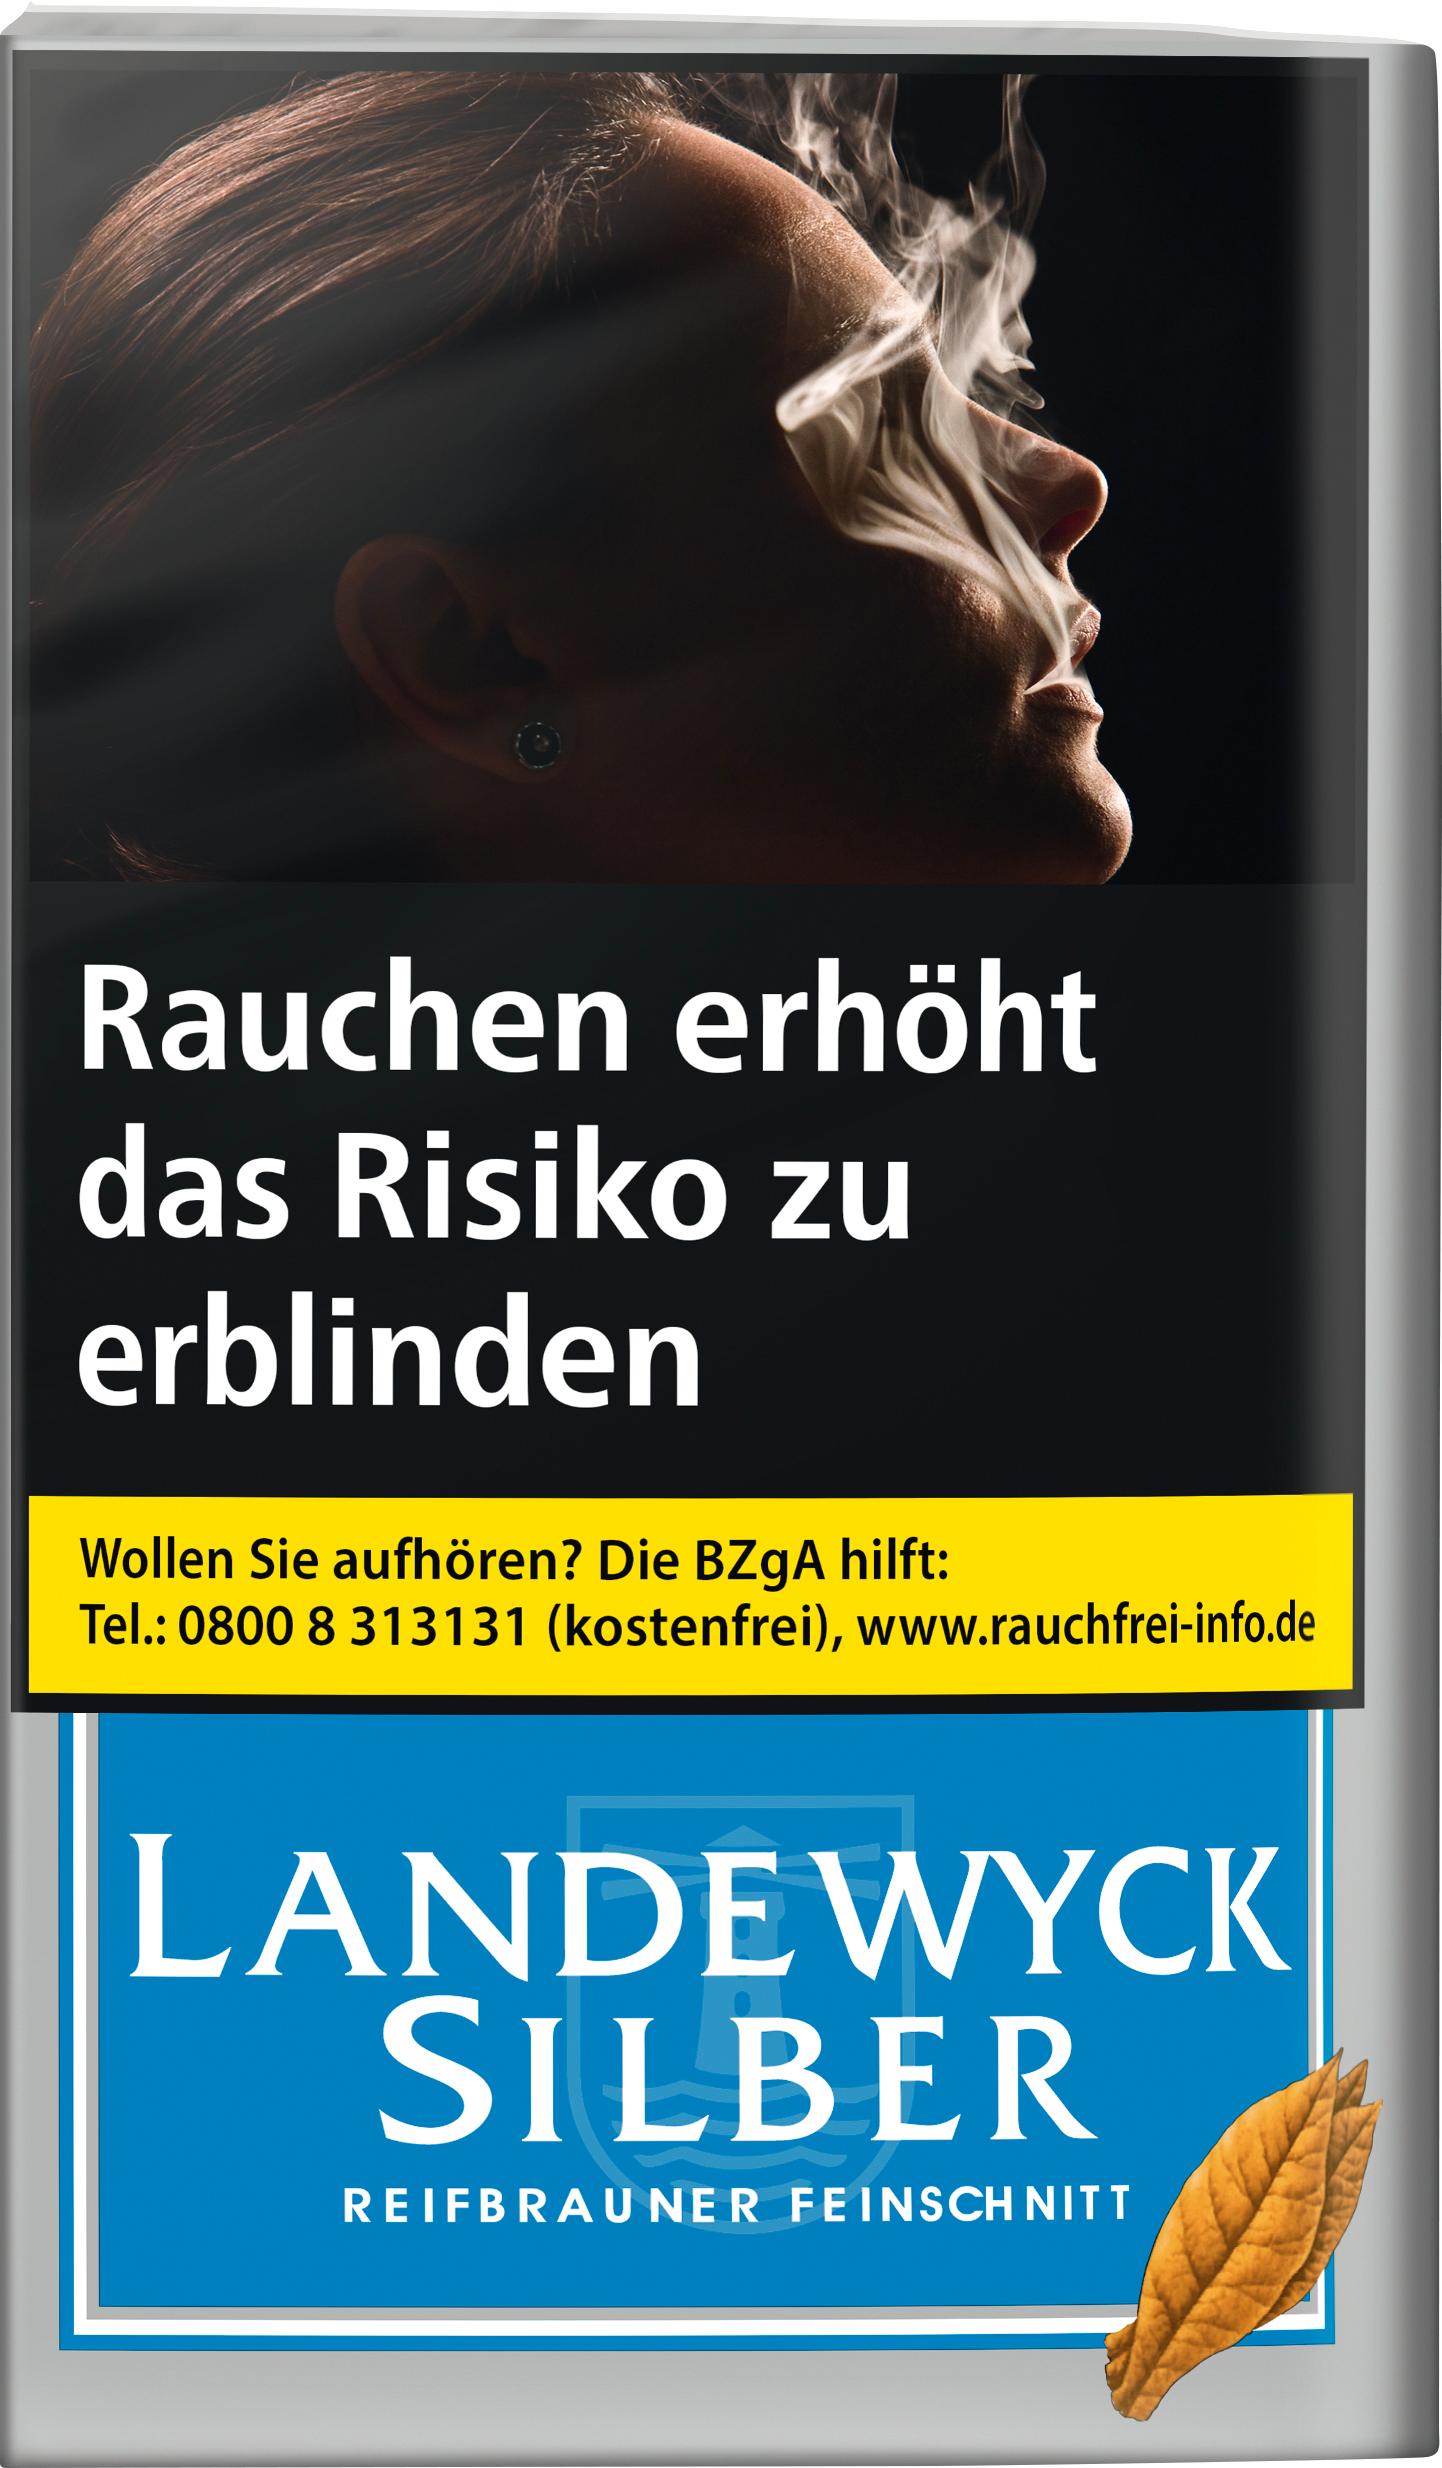 Landewyck Silber Zigarettentabak 1 Packung